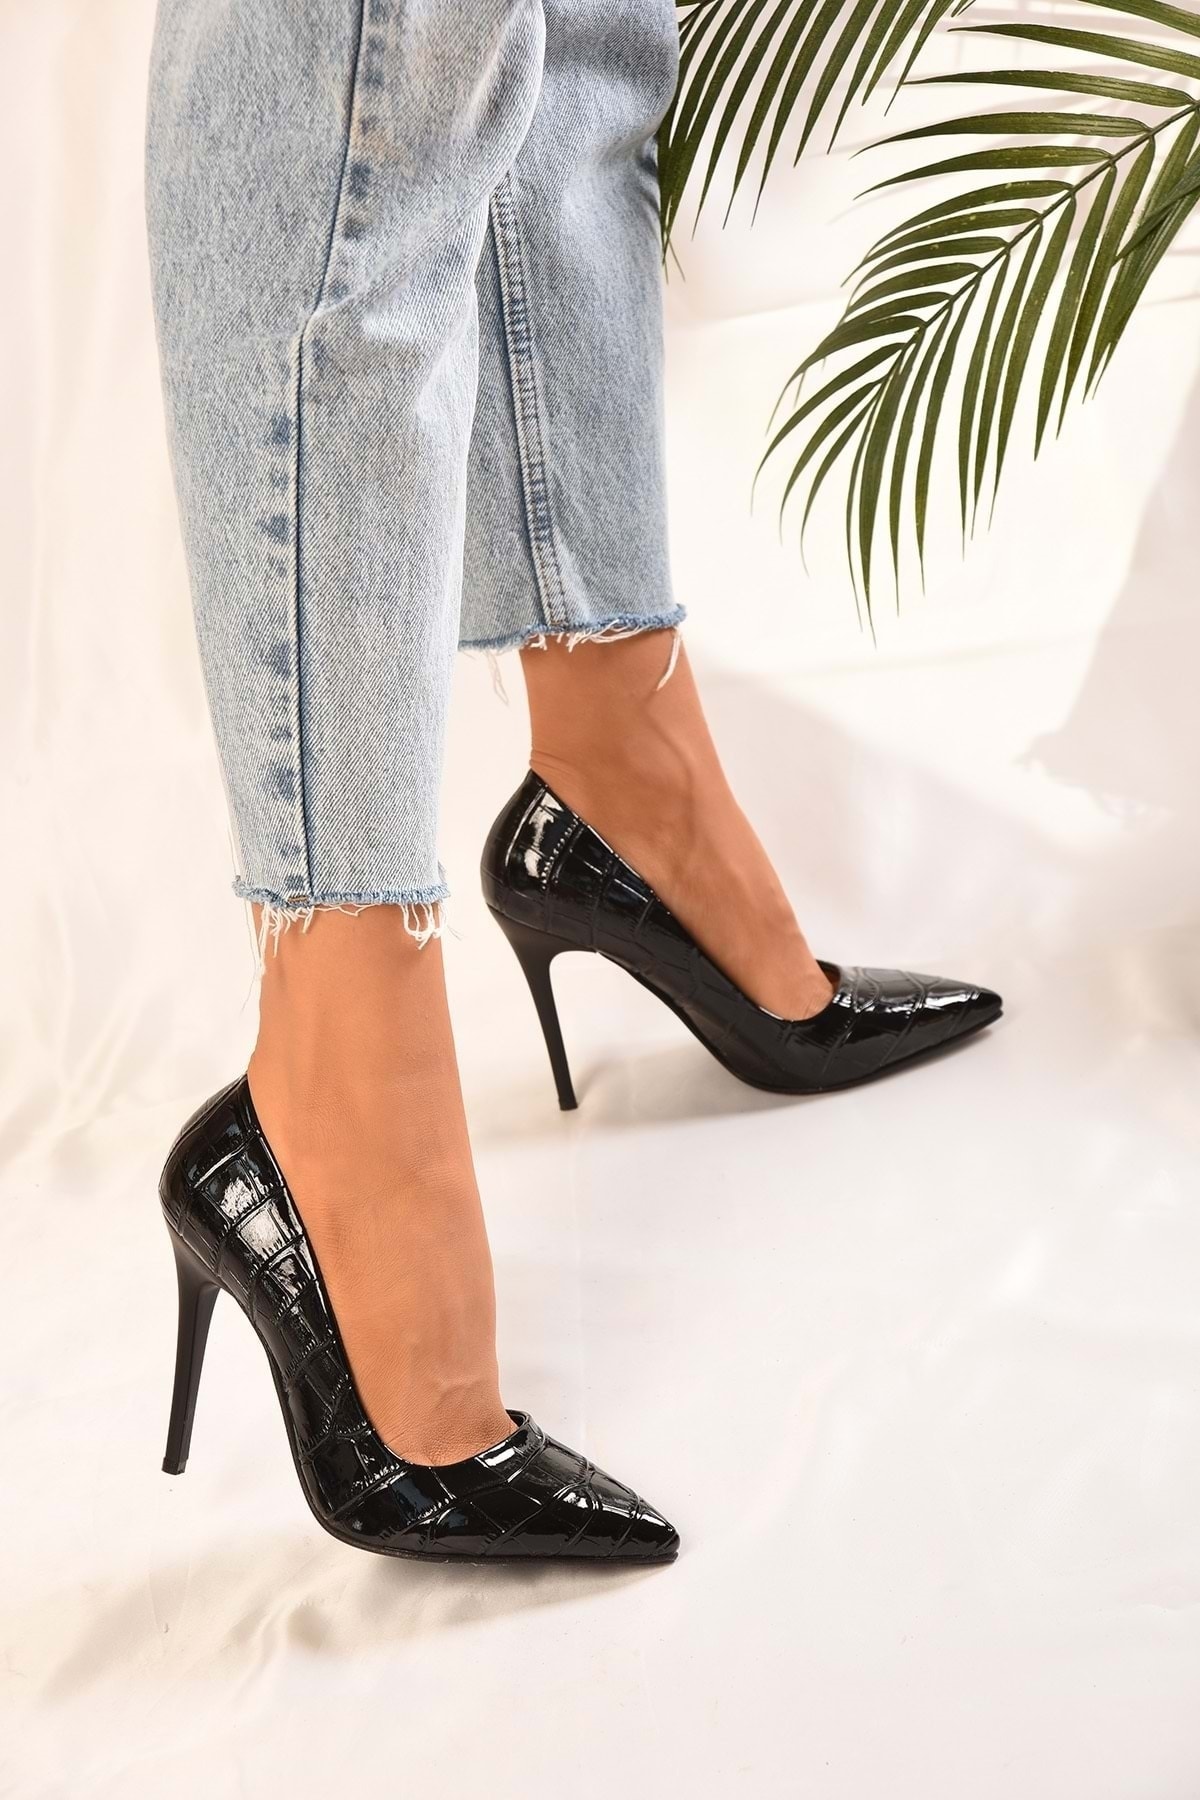 Levně Shoeberry Women's Pera Black Patent Leather Crocodile Heeled Shoes Stiletto